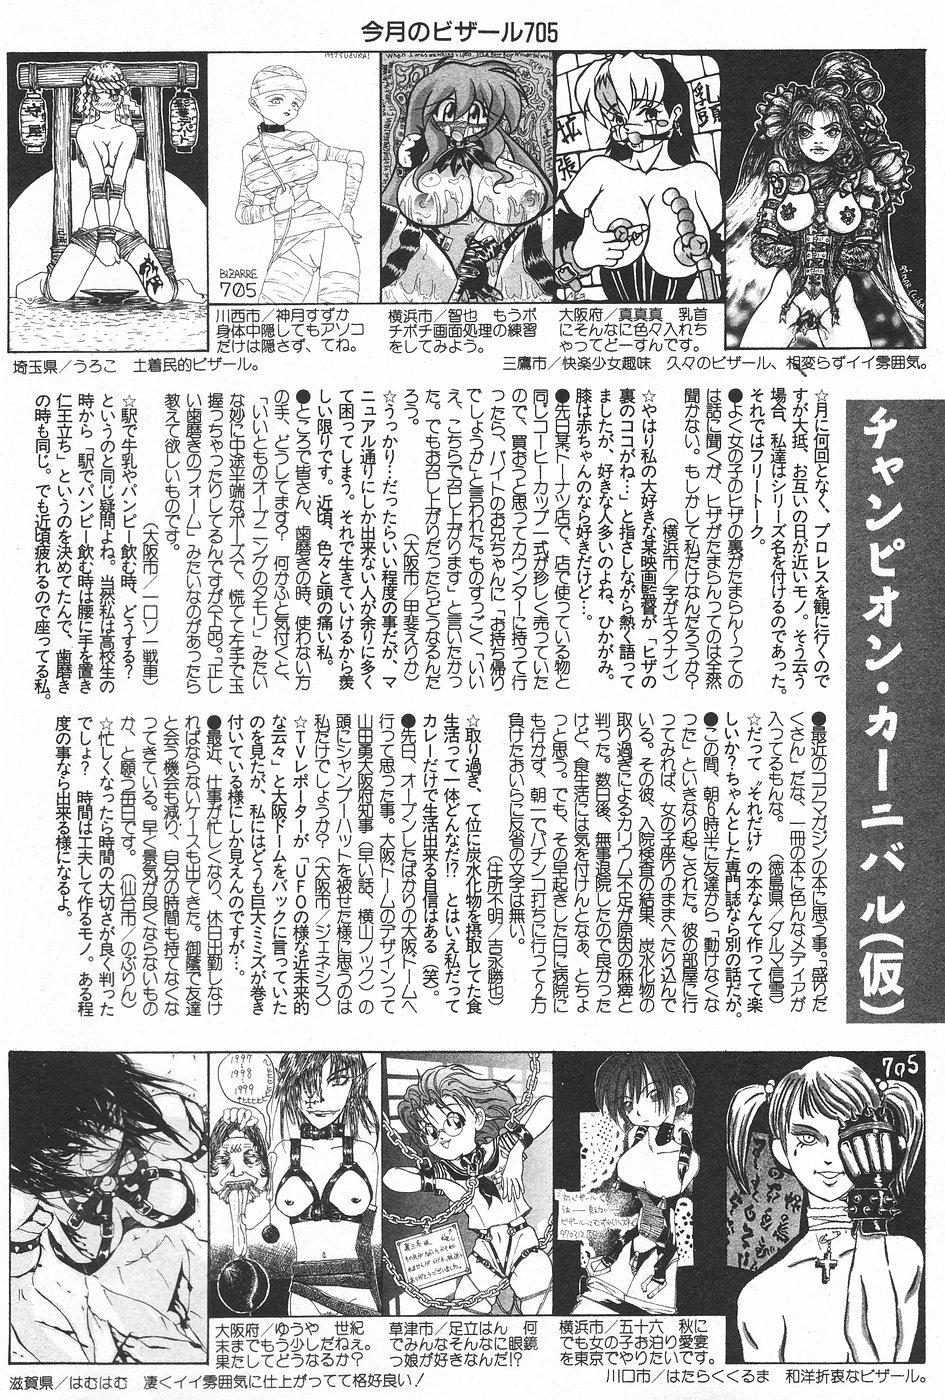 Manga Hotmilk 1997-05 177